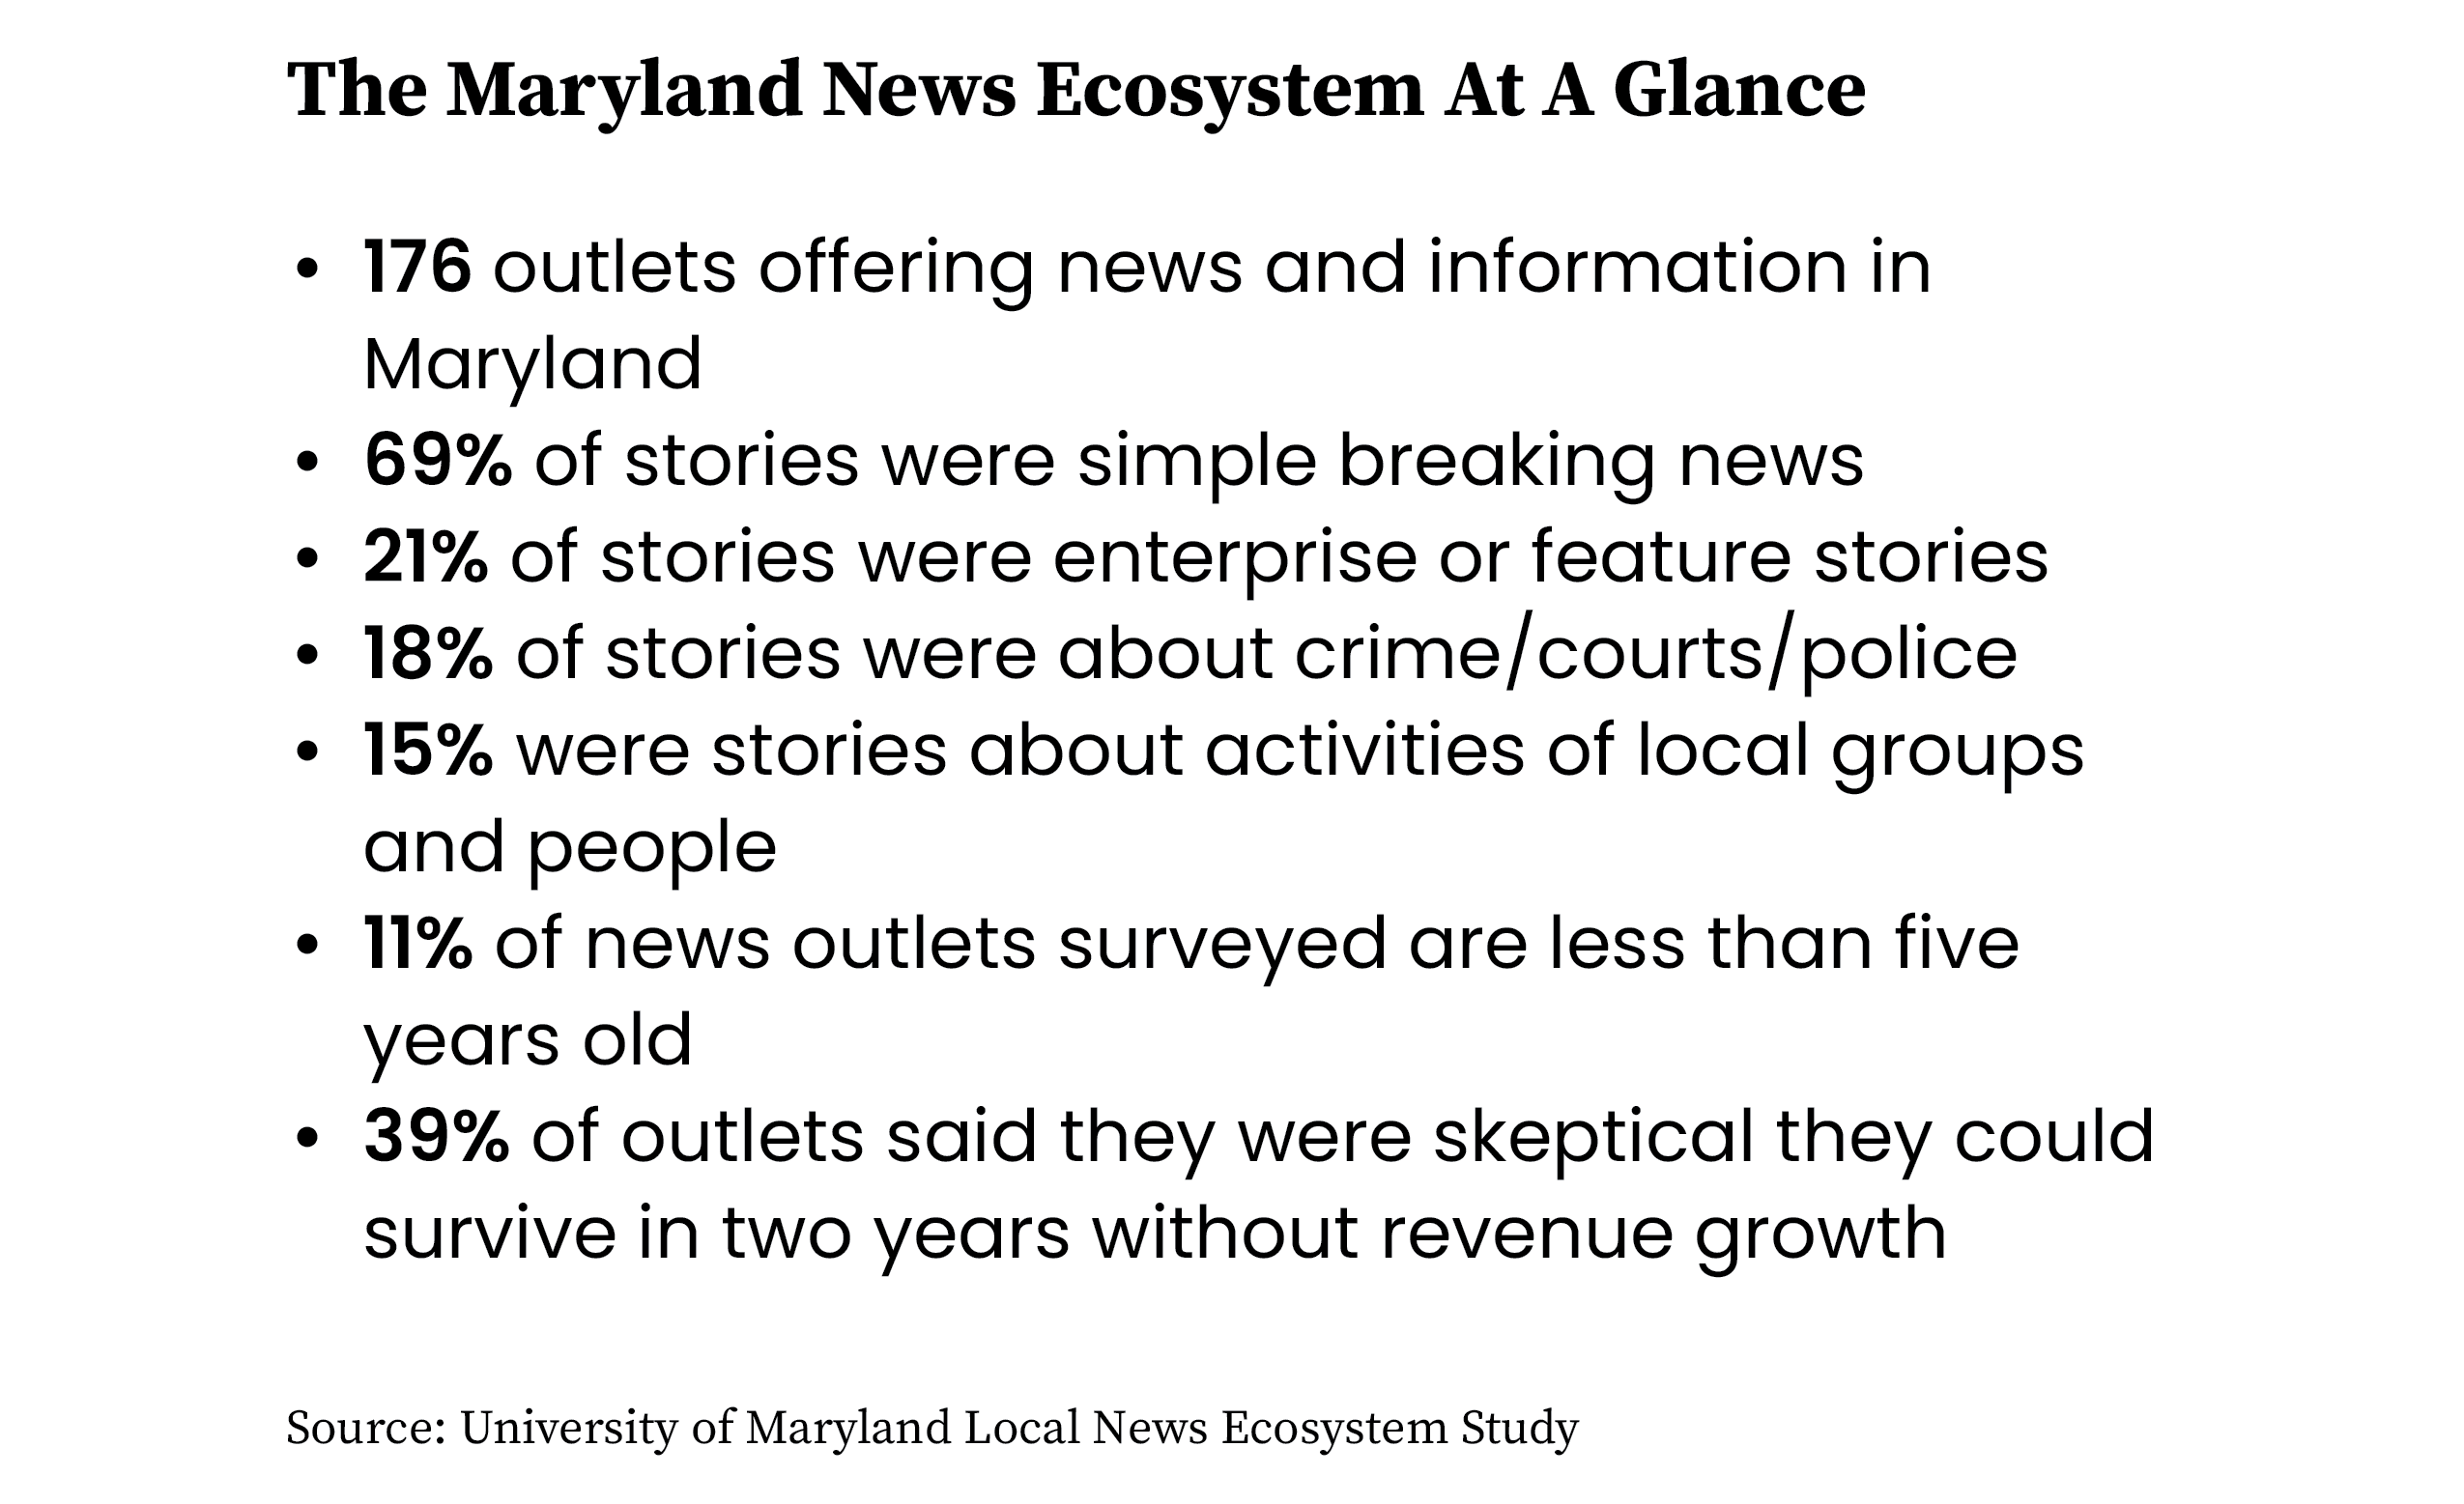 UMD Maryland Local News Ecosystem Study at a glance.